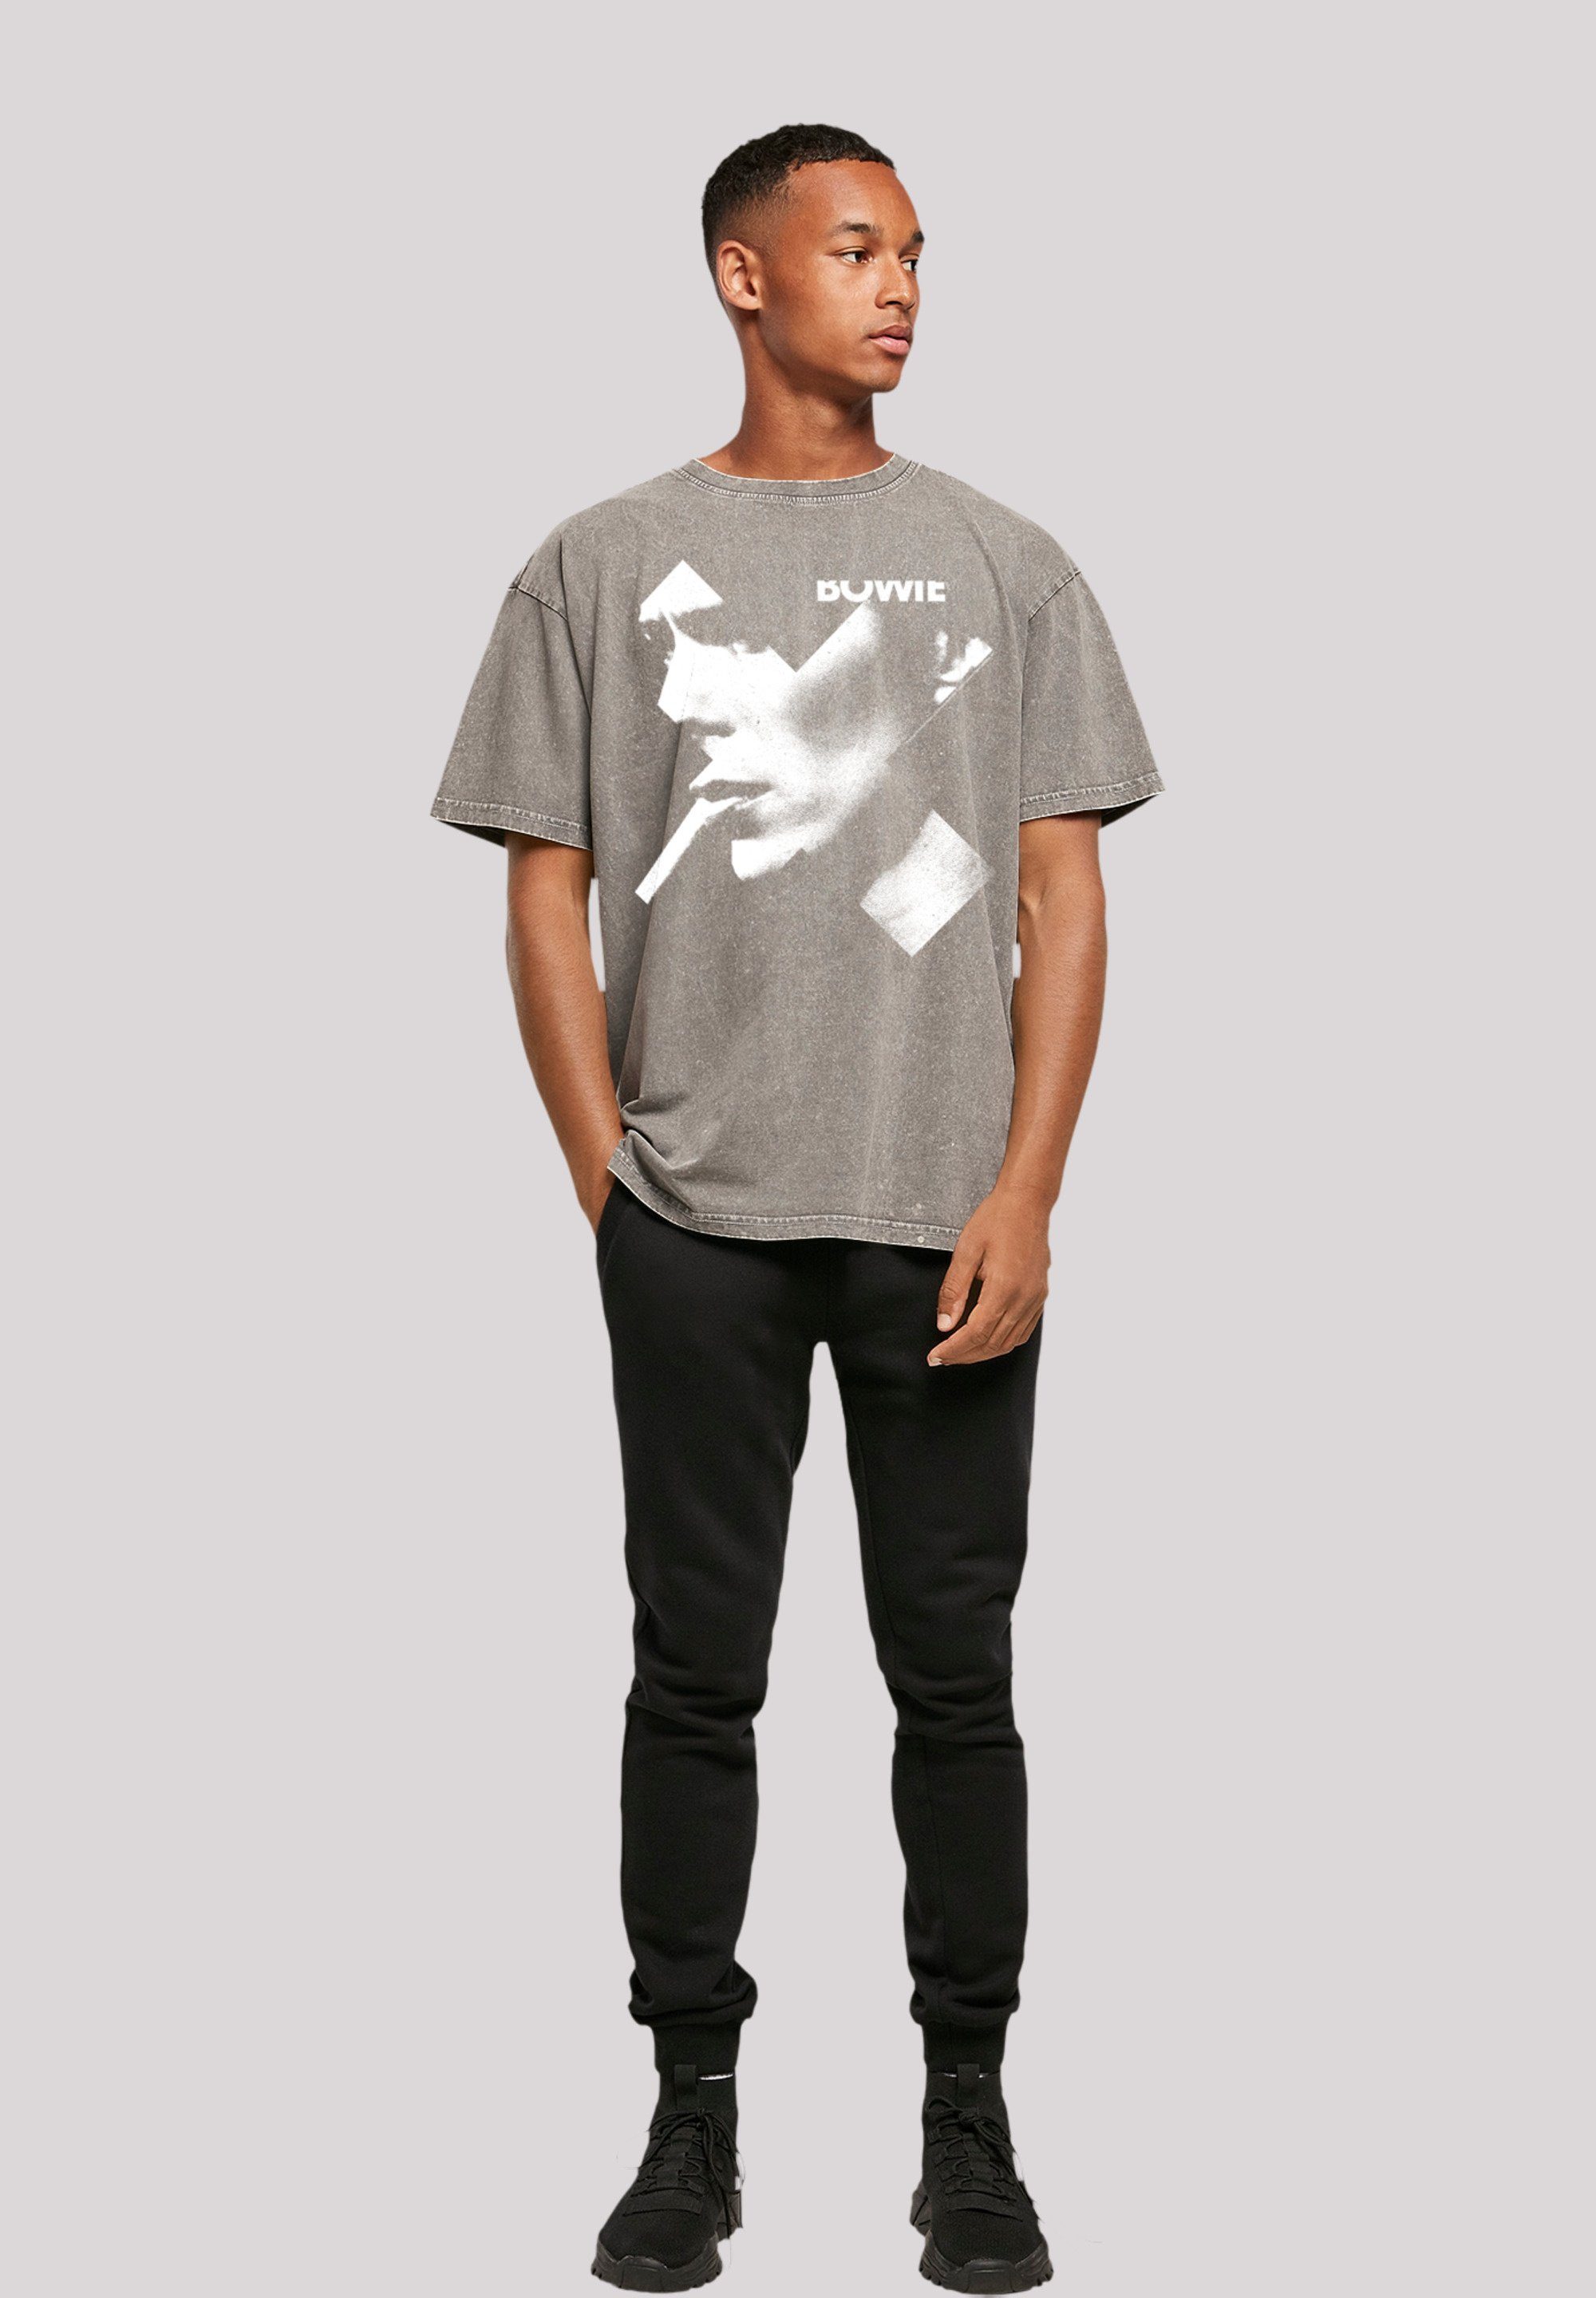 Print F4NT4STIC T-Shirt T-Shirt Oversize Asphalt Bowie David